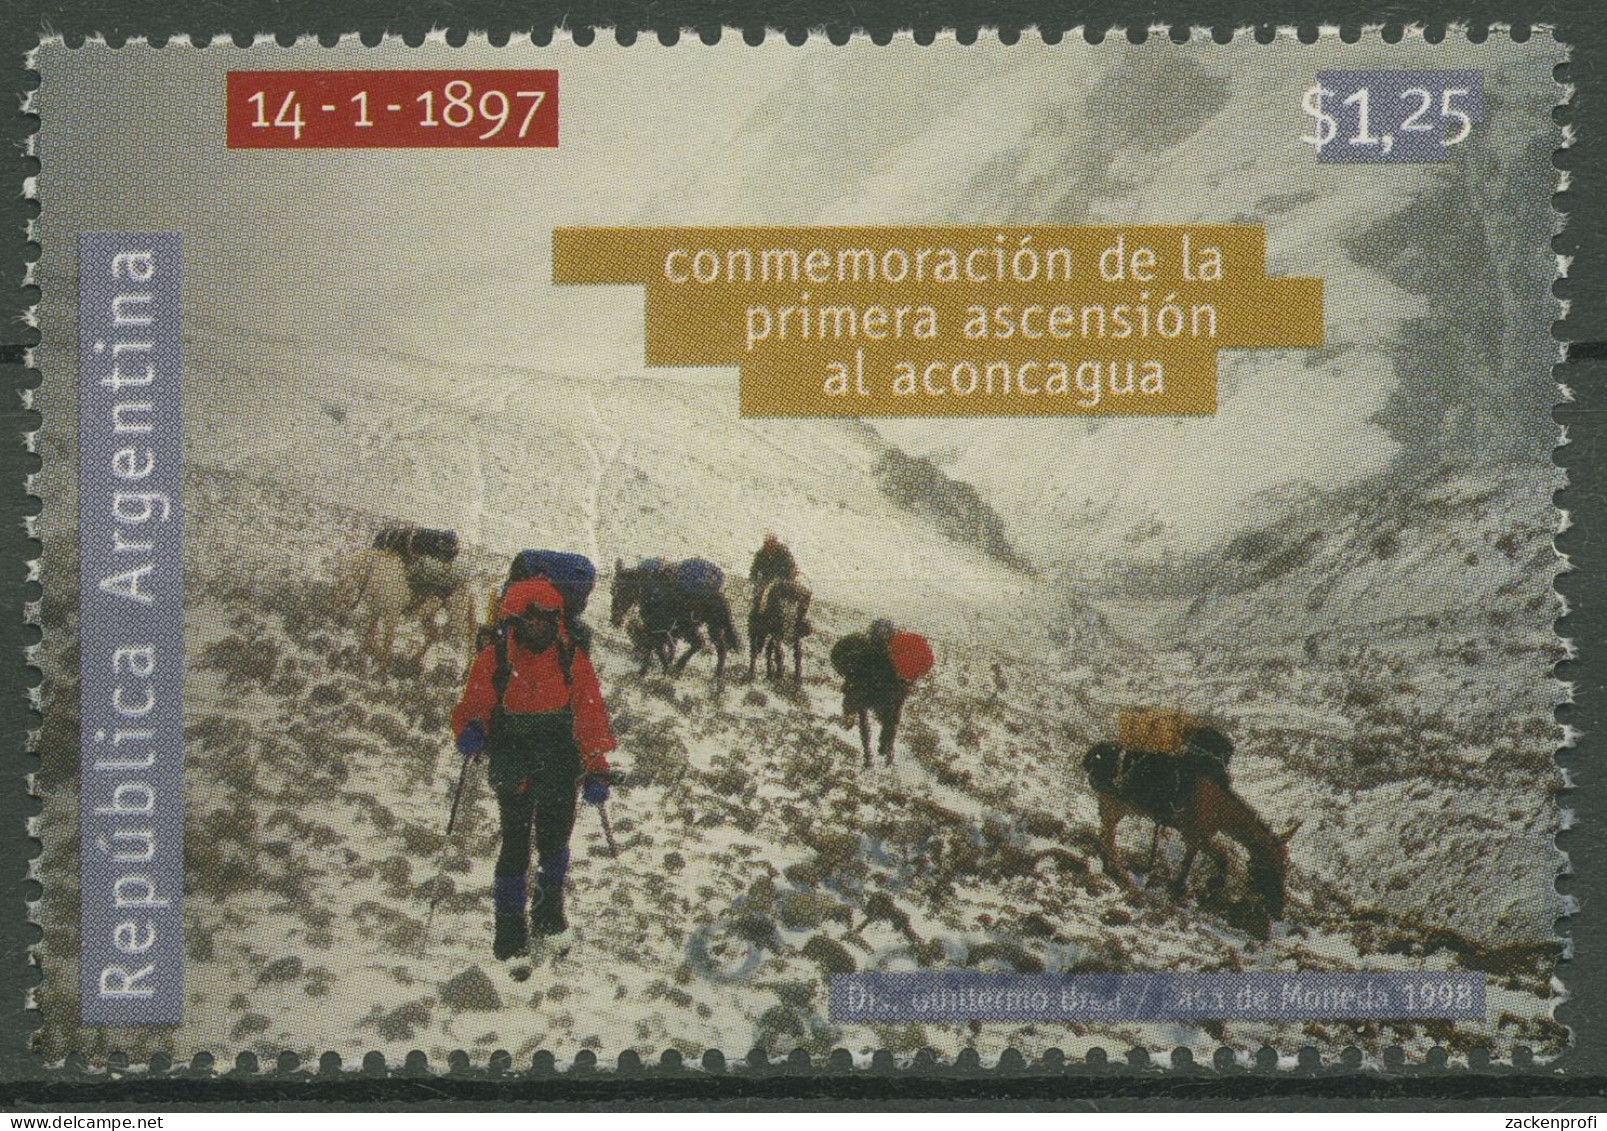 Argentinien 1998 Bergsteigen Erstbesteigung Des Aconcagua 2394 Gestempelt - Oblitérés